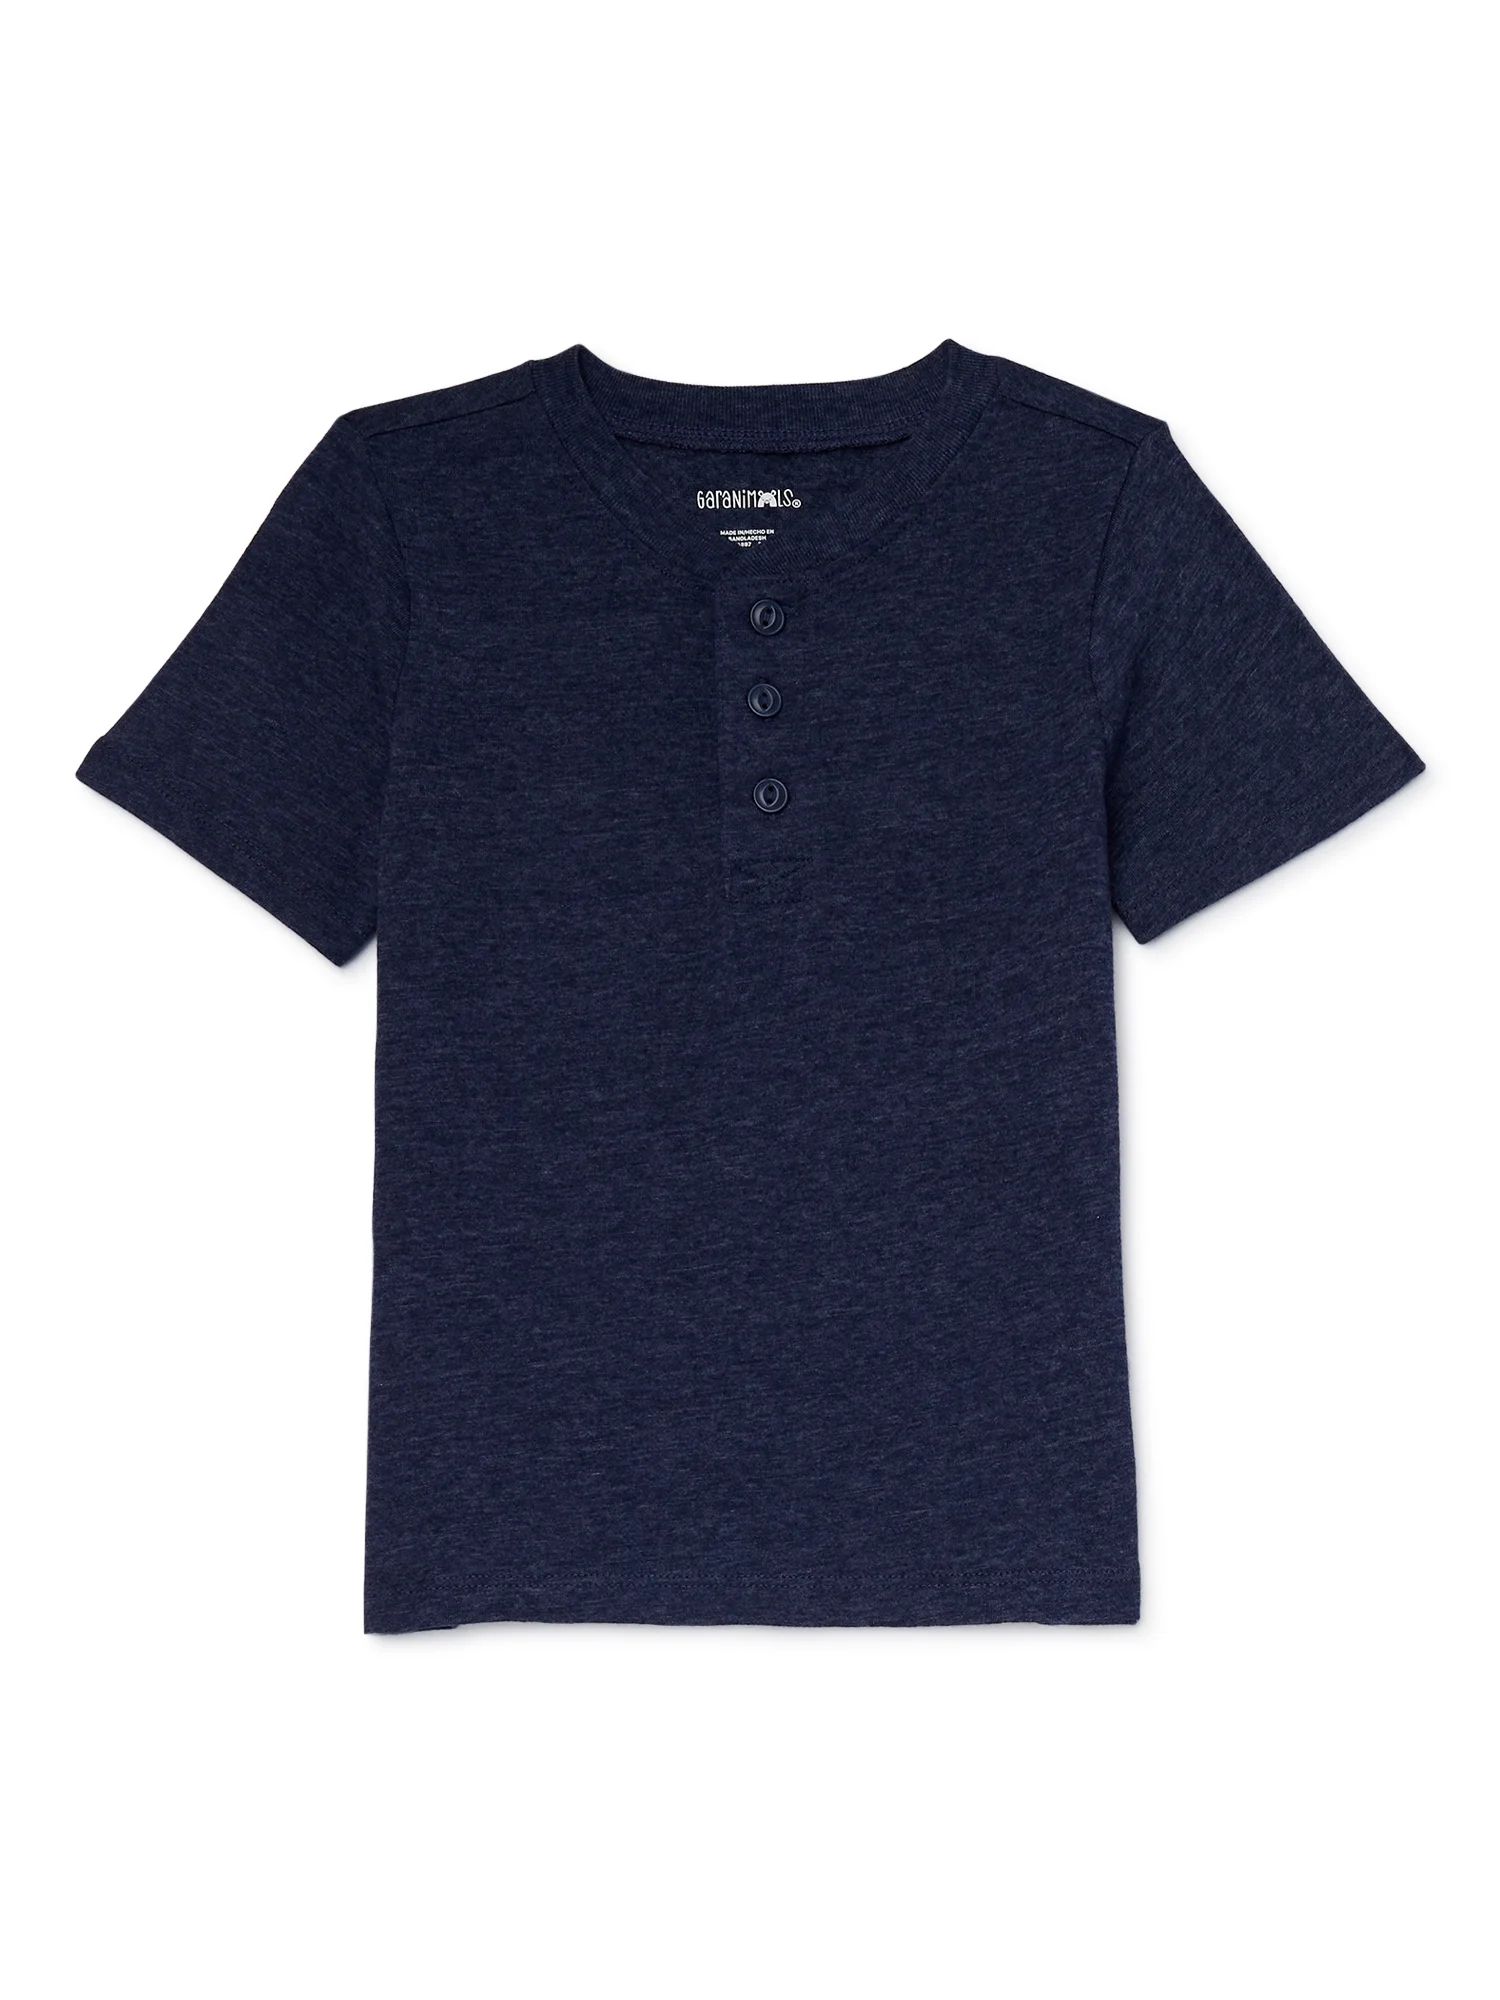 Garanimals Toddler Boy Short Sleeve Henley T-Shirt, Sizes 18M-5T | Walmart (US)